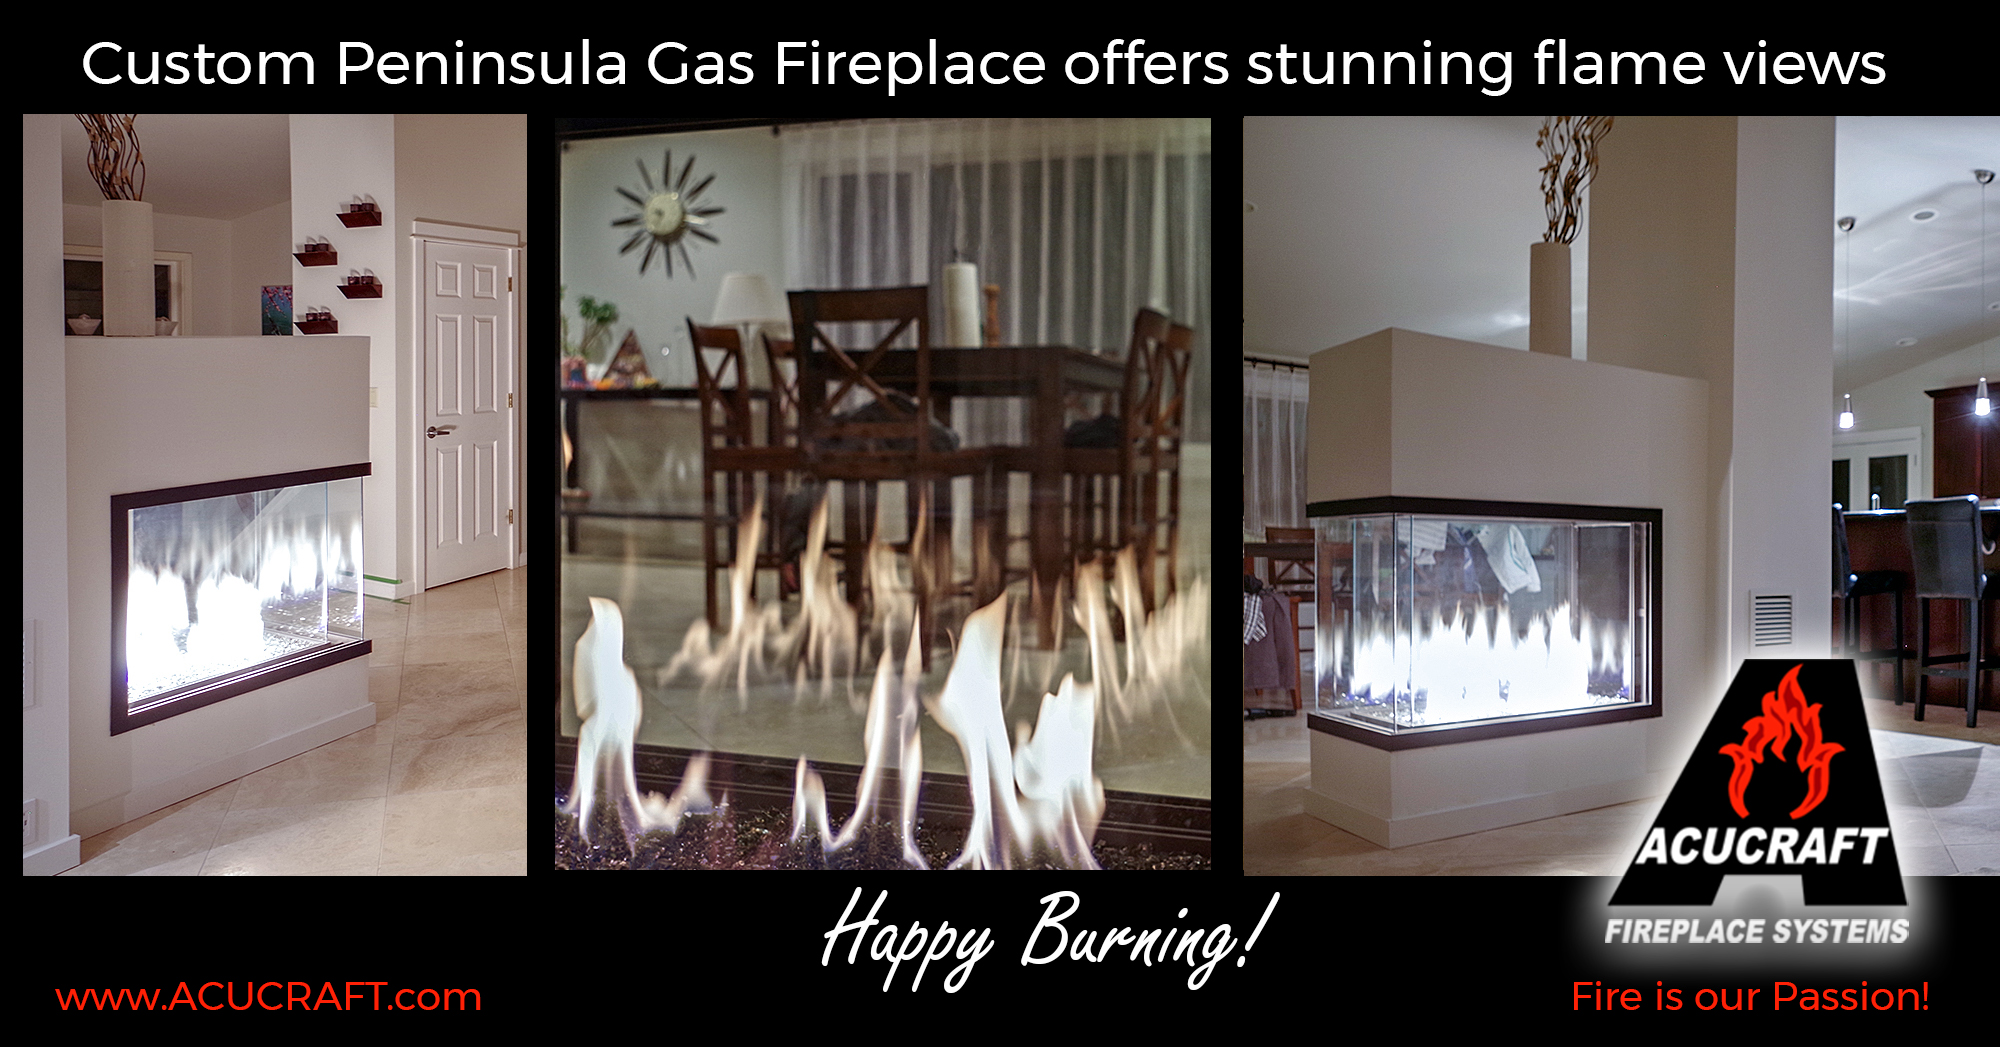 Gas Fireplace without Glass Inspirational Idea to Done Acucraft Custom Peninsula Gas Fireplace